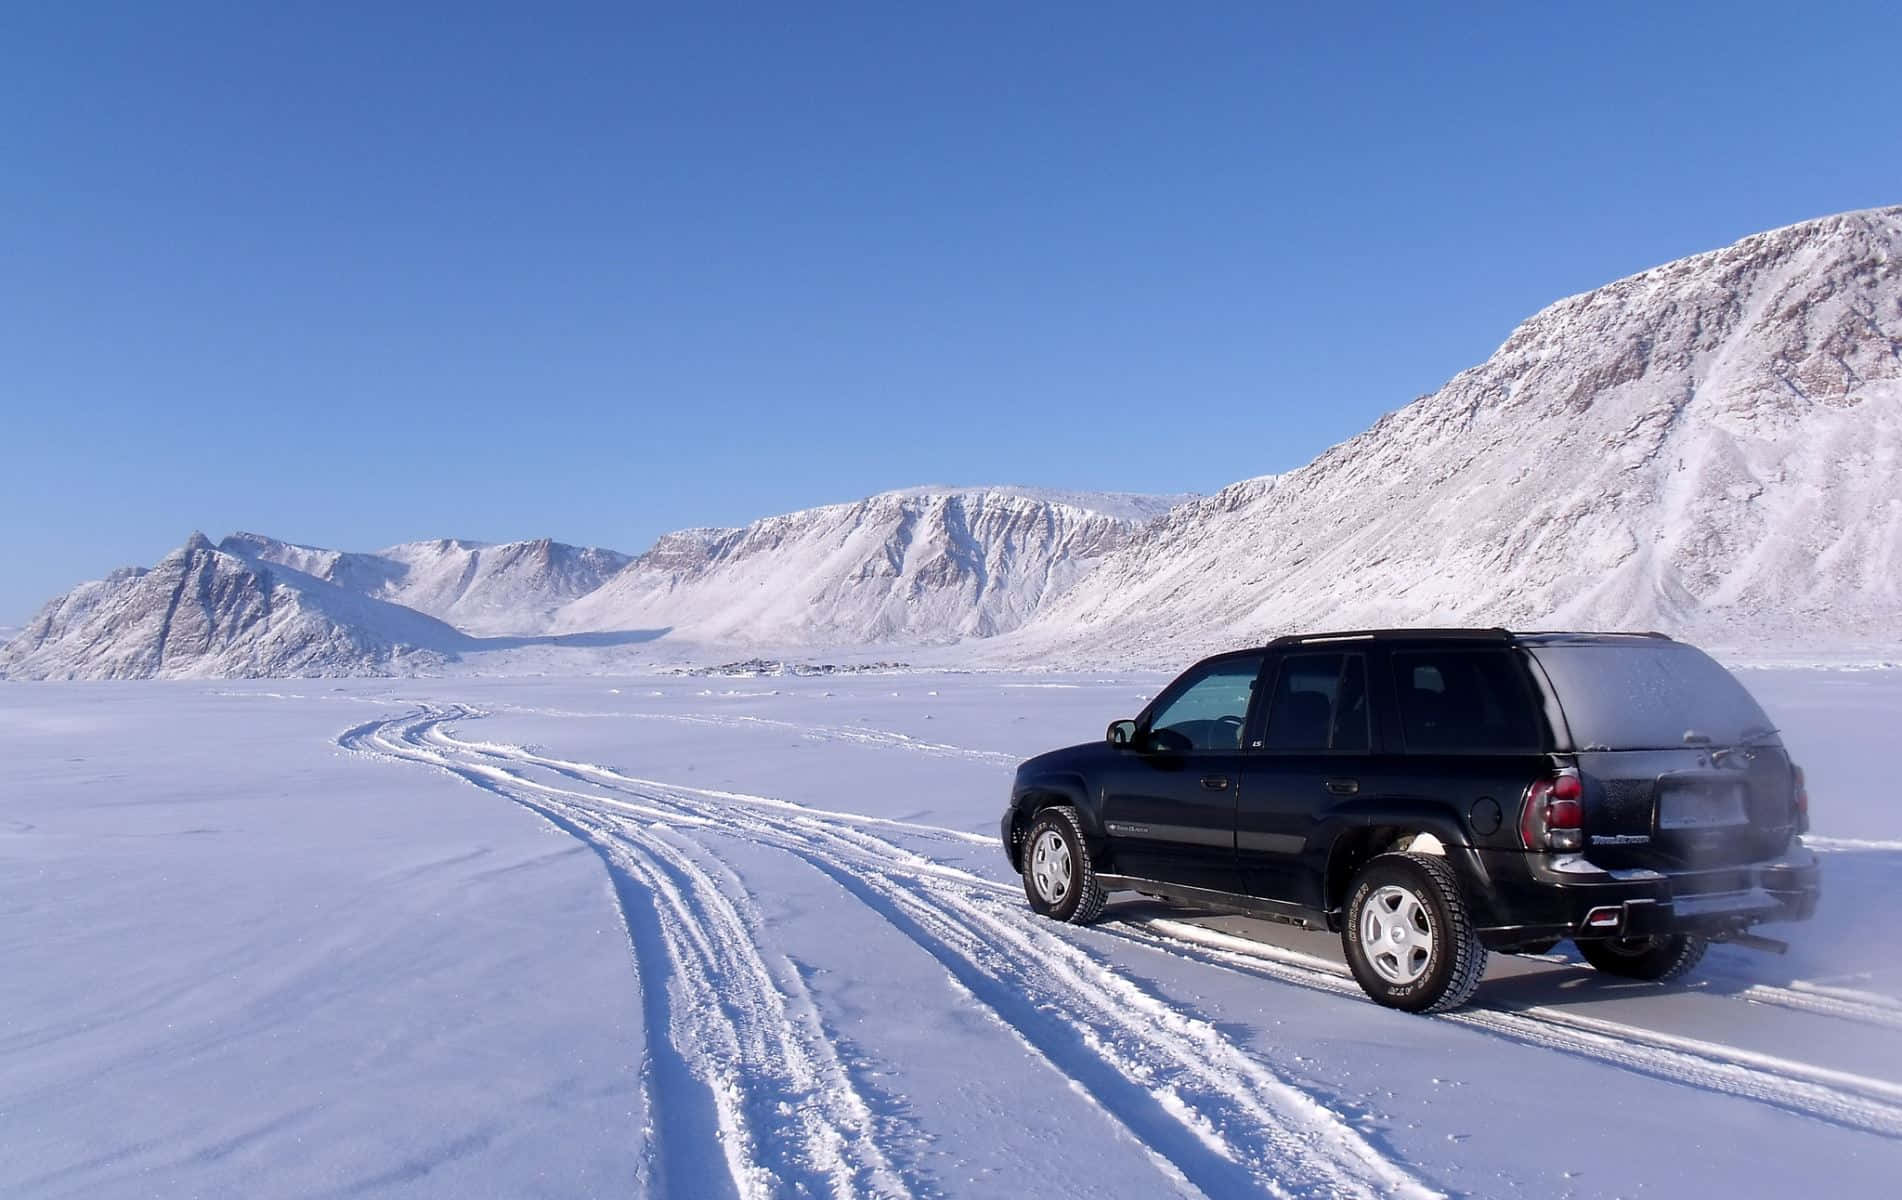 Winter Road Trip: Snowy drive through scenic mountain terrain Wallpaper